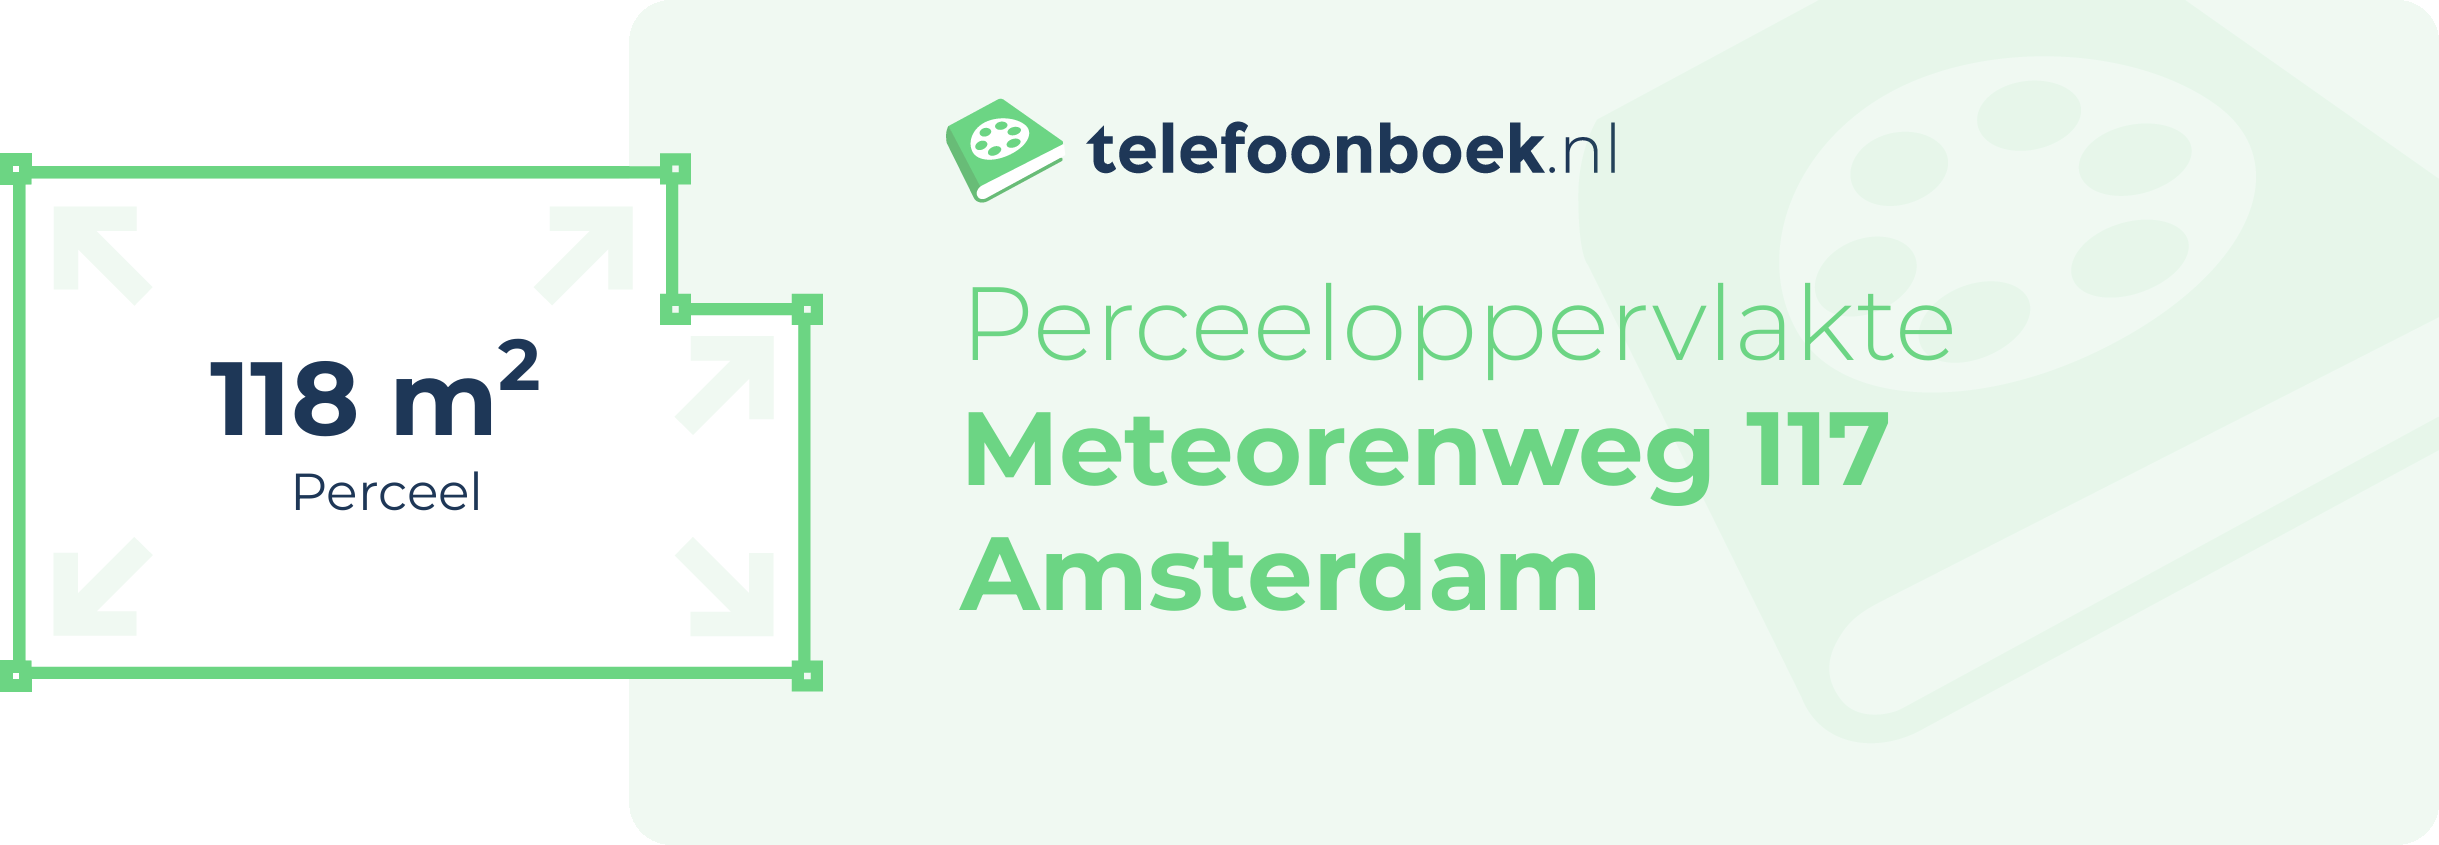 Perceeloppervlakte Meteorenweg 117 Amsterdam